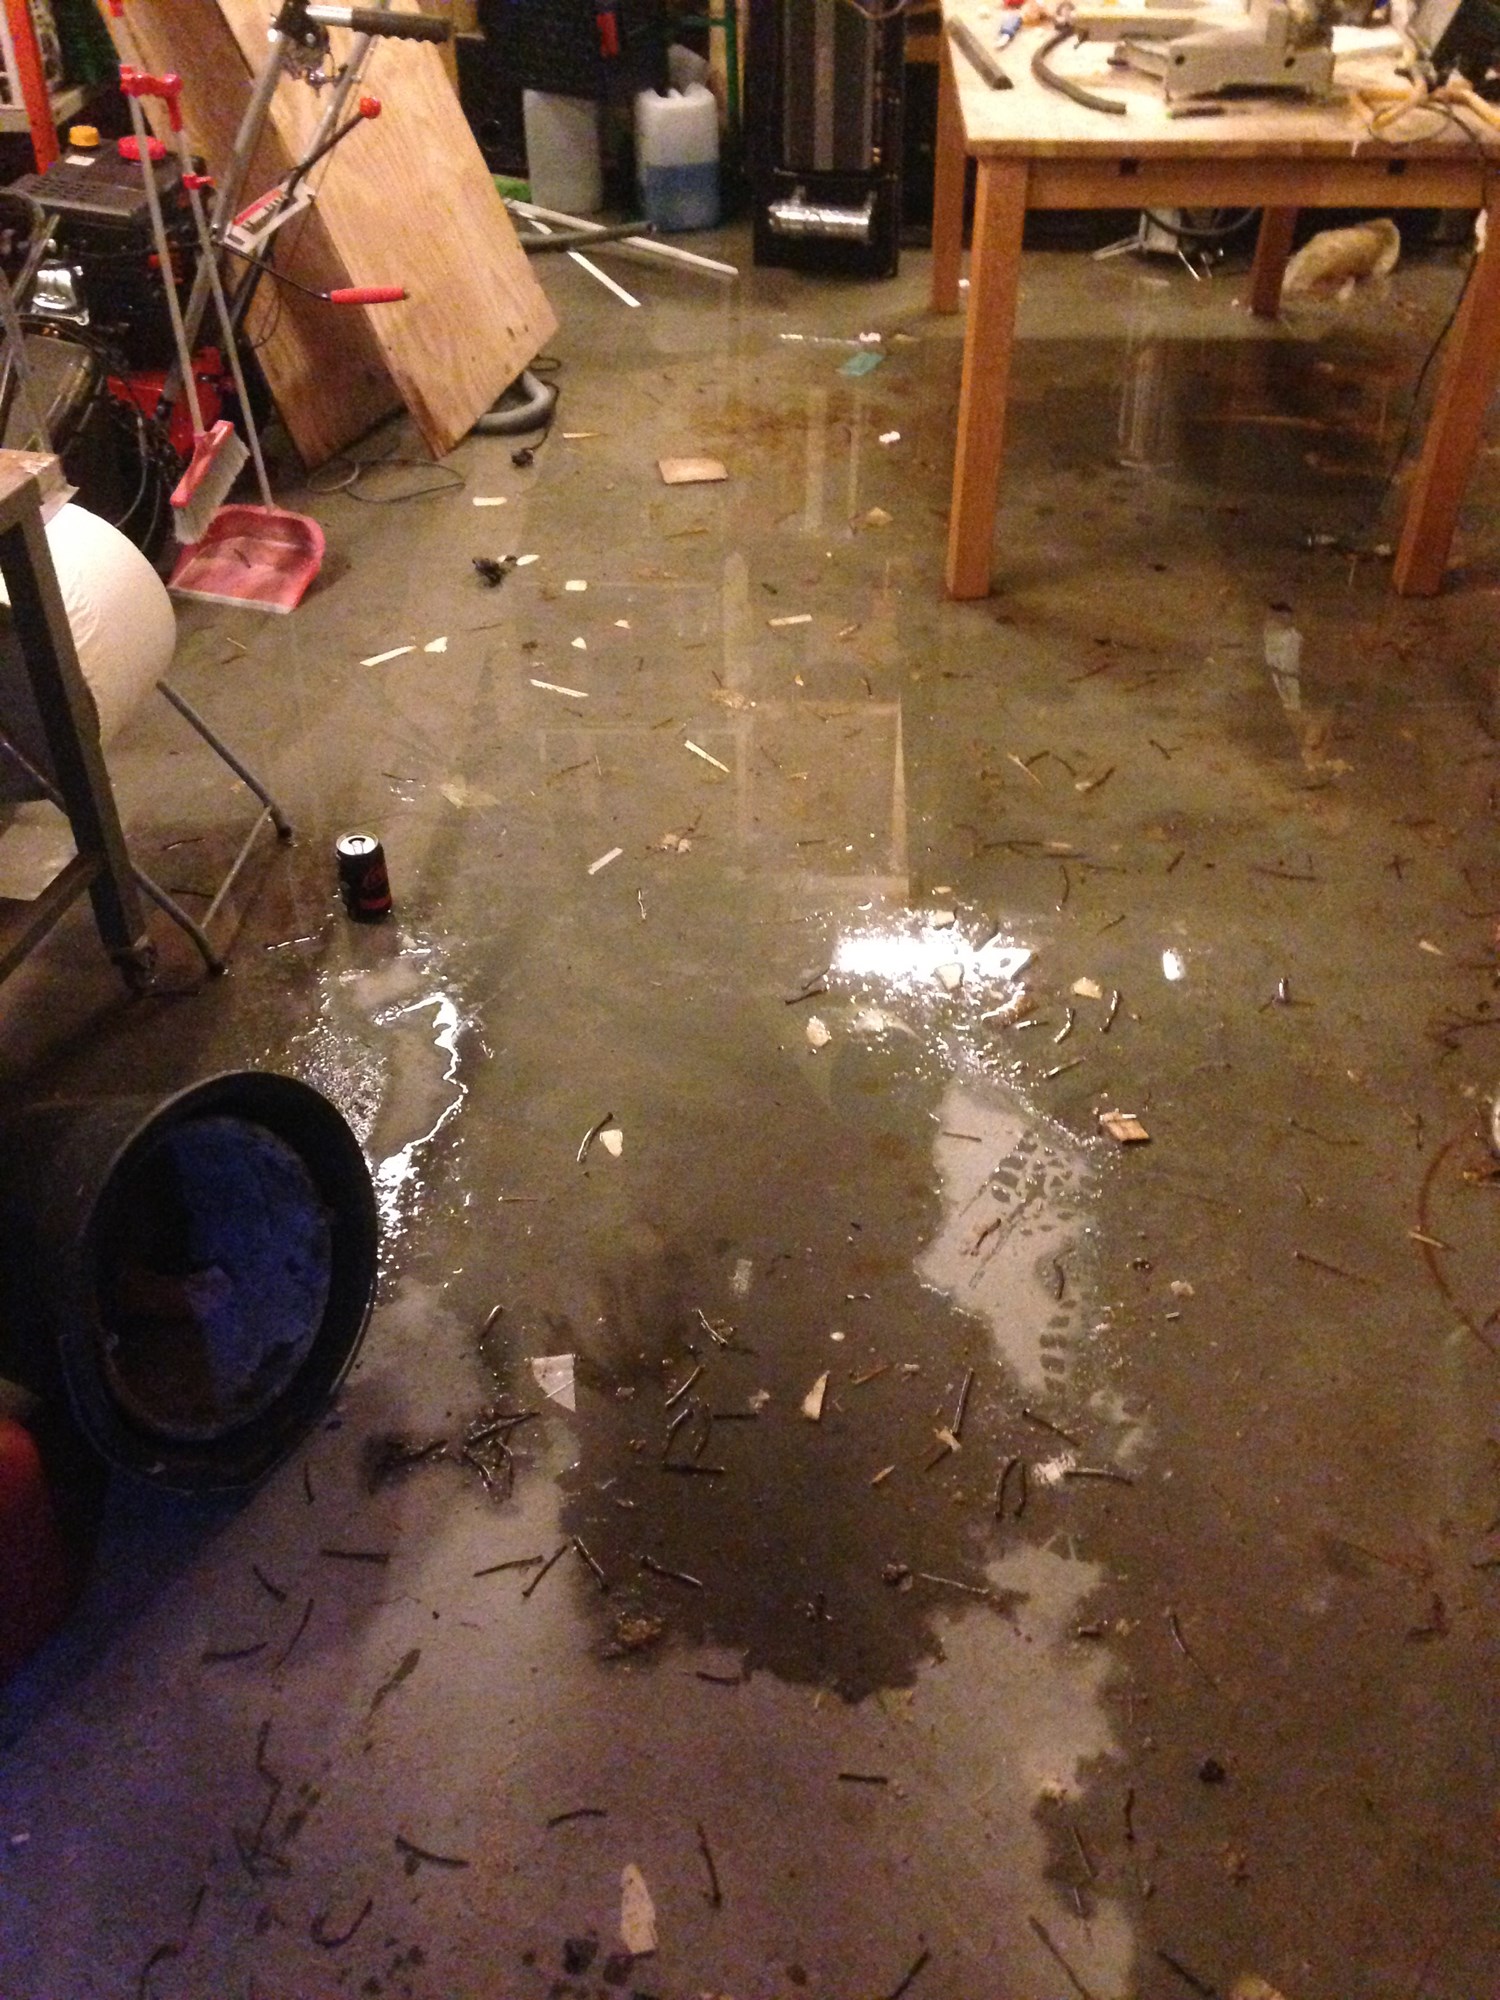 oversvømmelse i garasje pga manglende fuktsperre mot grunn - image.jpeg - HaakonMD